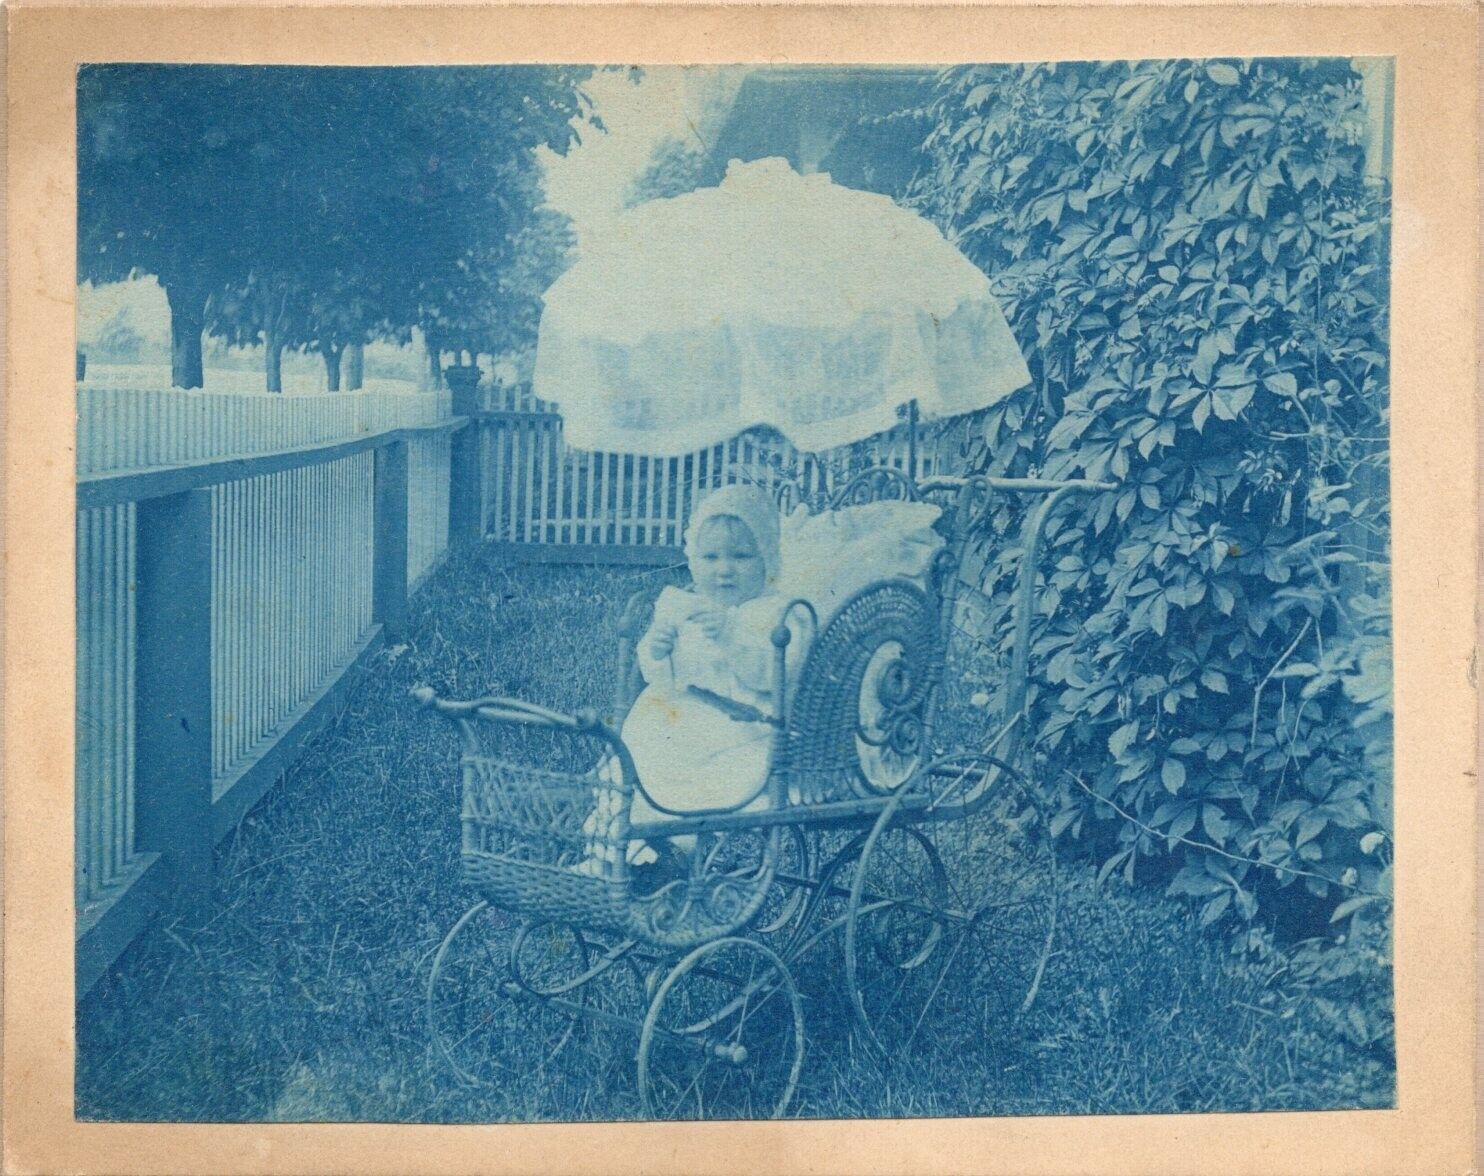 Baby in Ornate Victorian Wicker Carriage w/ Parasol Cyanotype Photo 4 x 5 in.